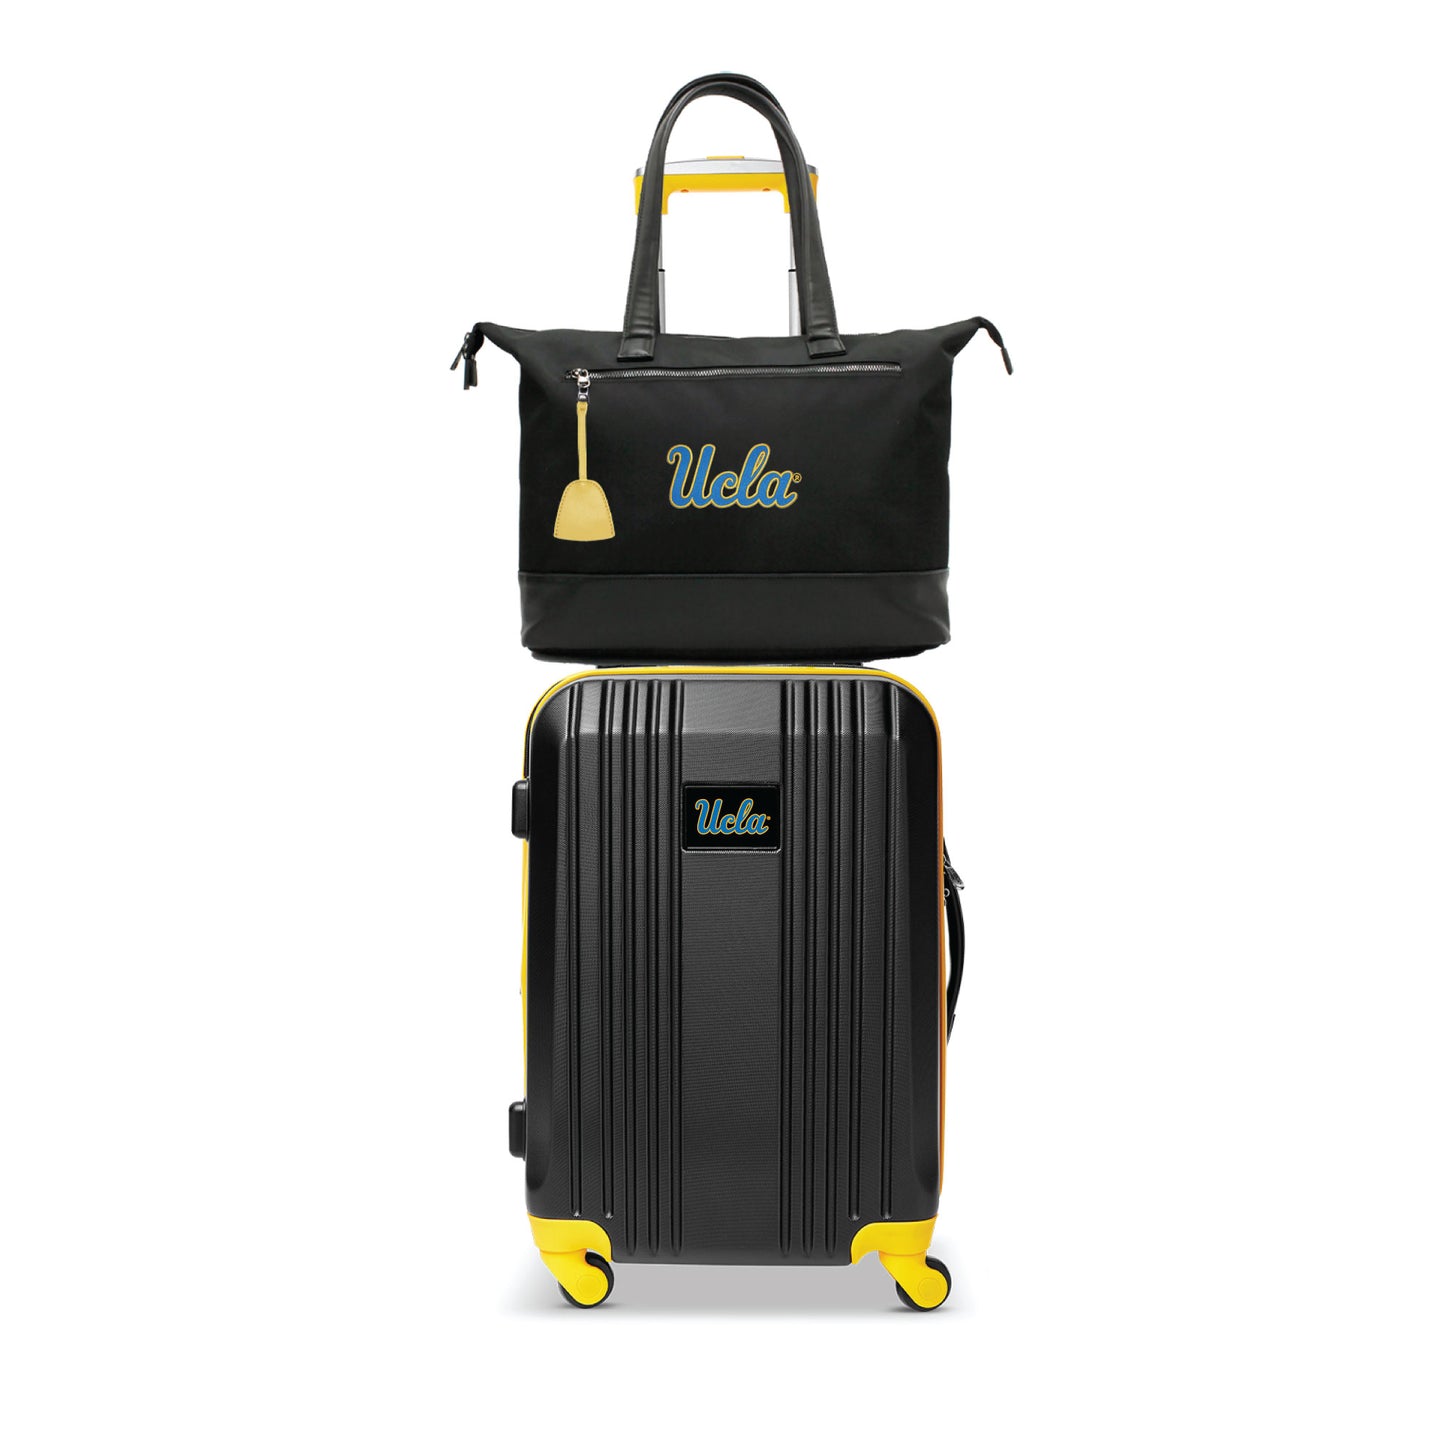 UCLA Bruins Premium Laptop Tote Bag and Luggage Set